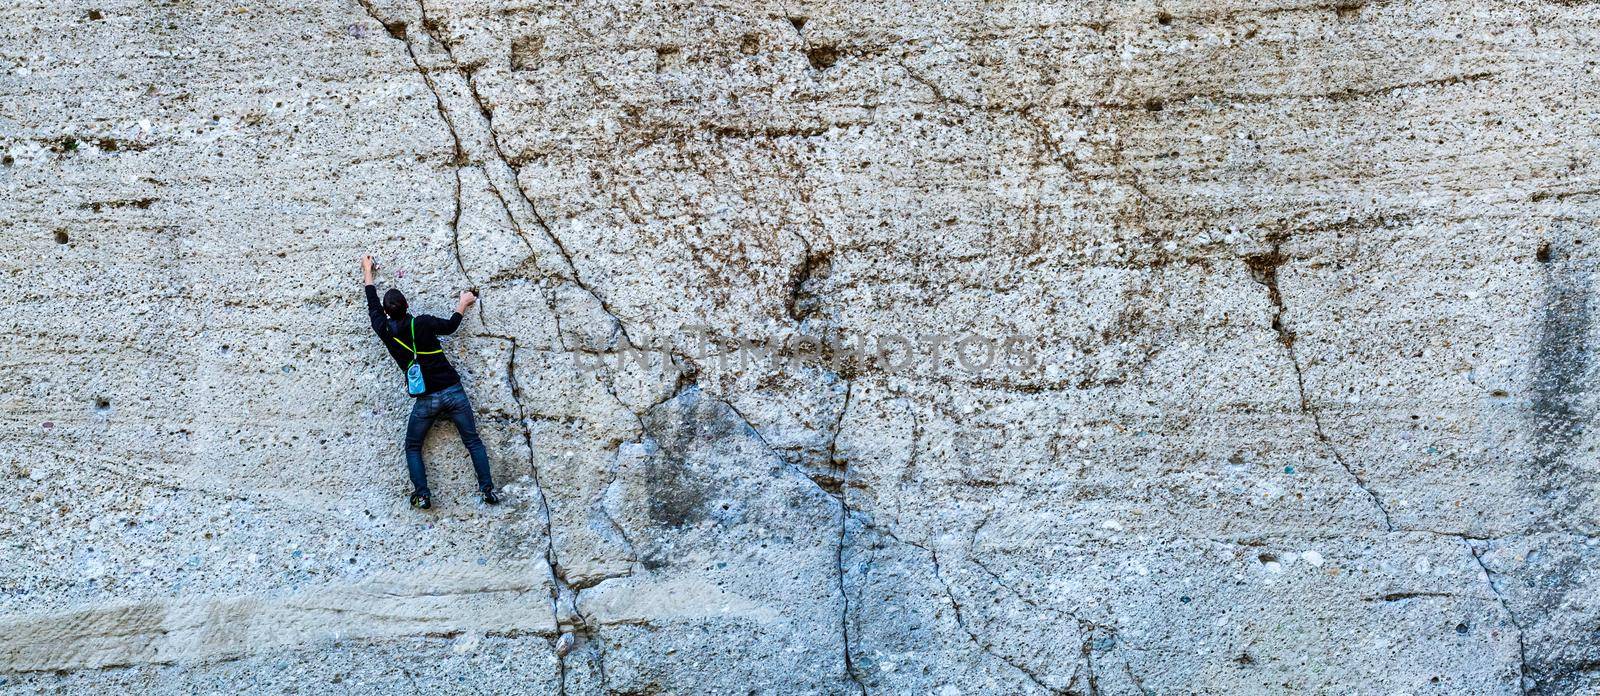 a climber climbs a mountain on a stone cliff. bunner by Edophoto